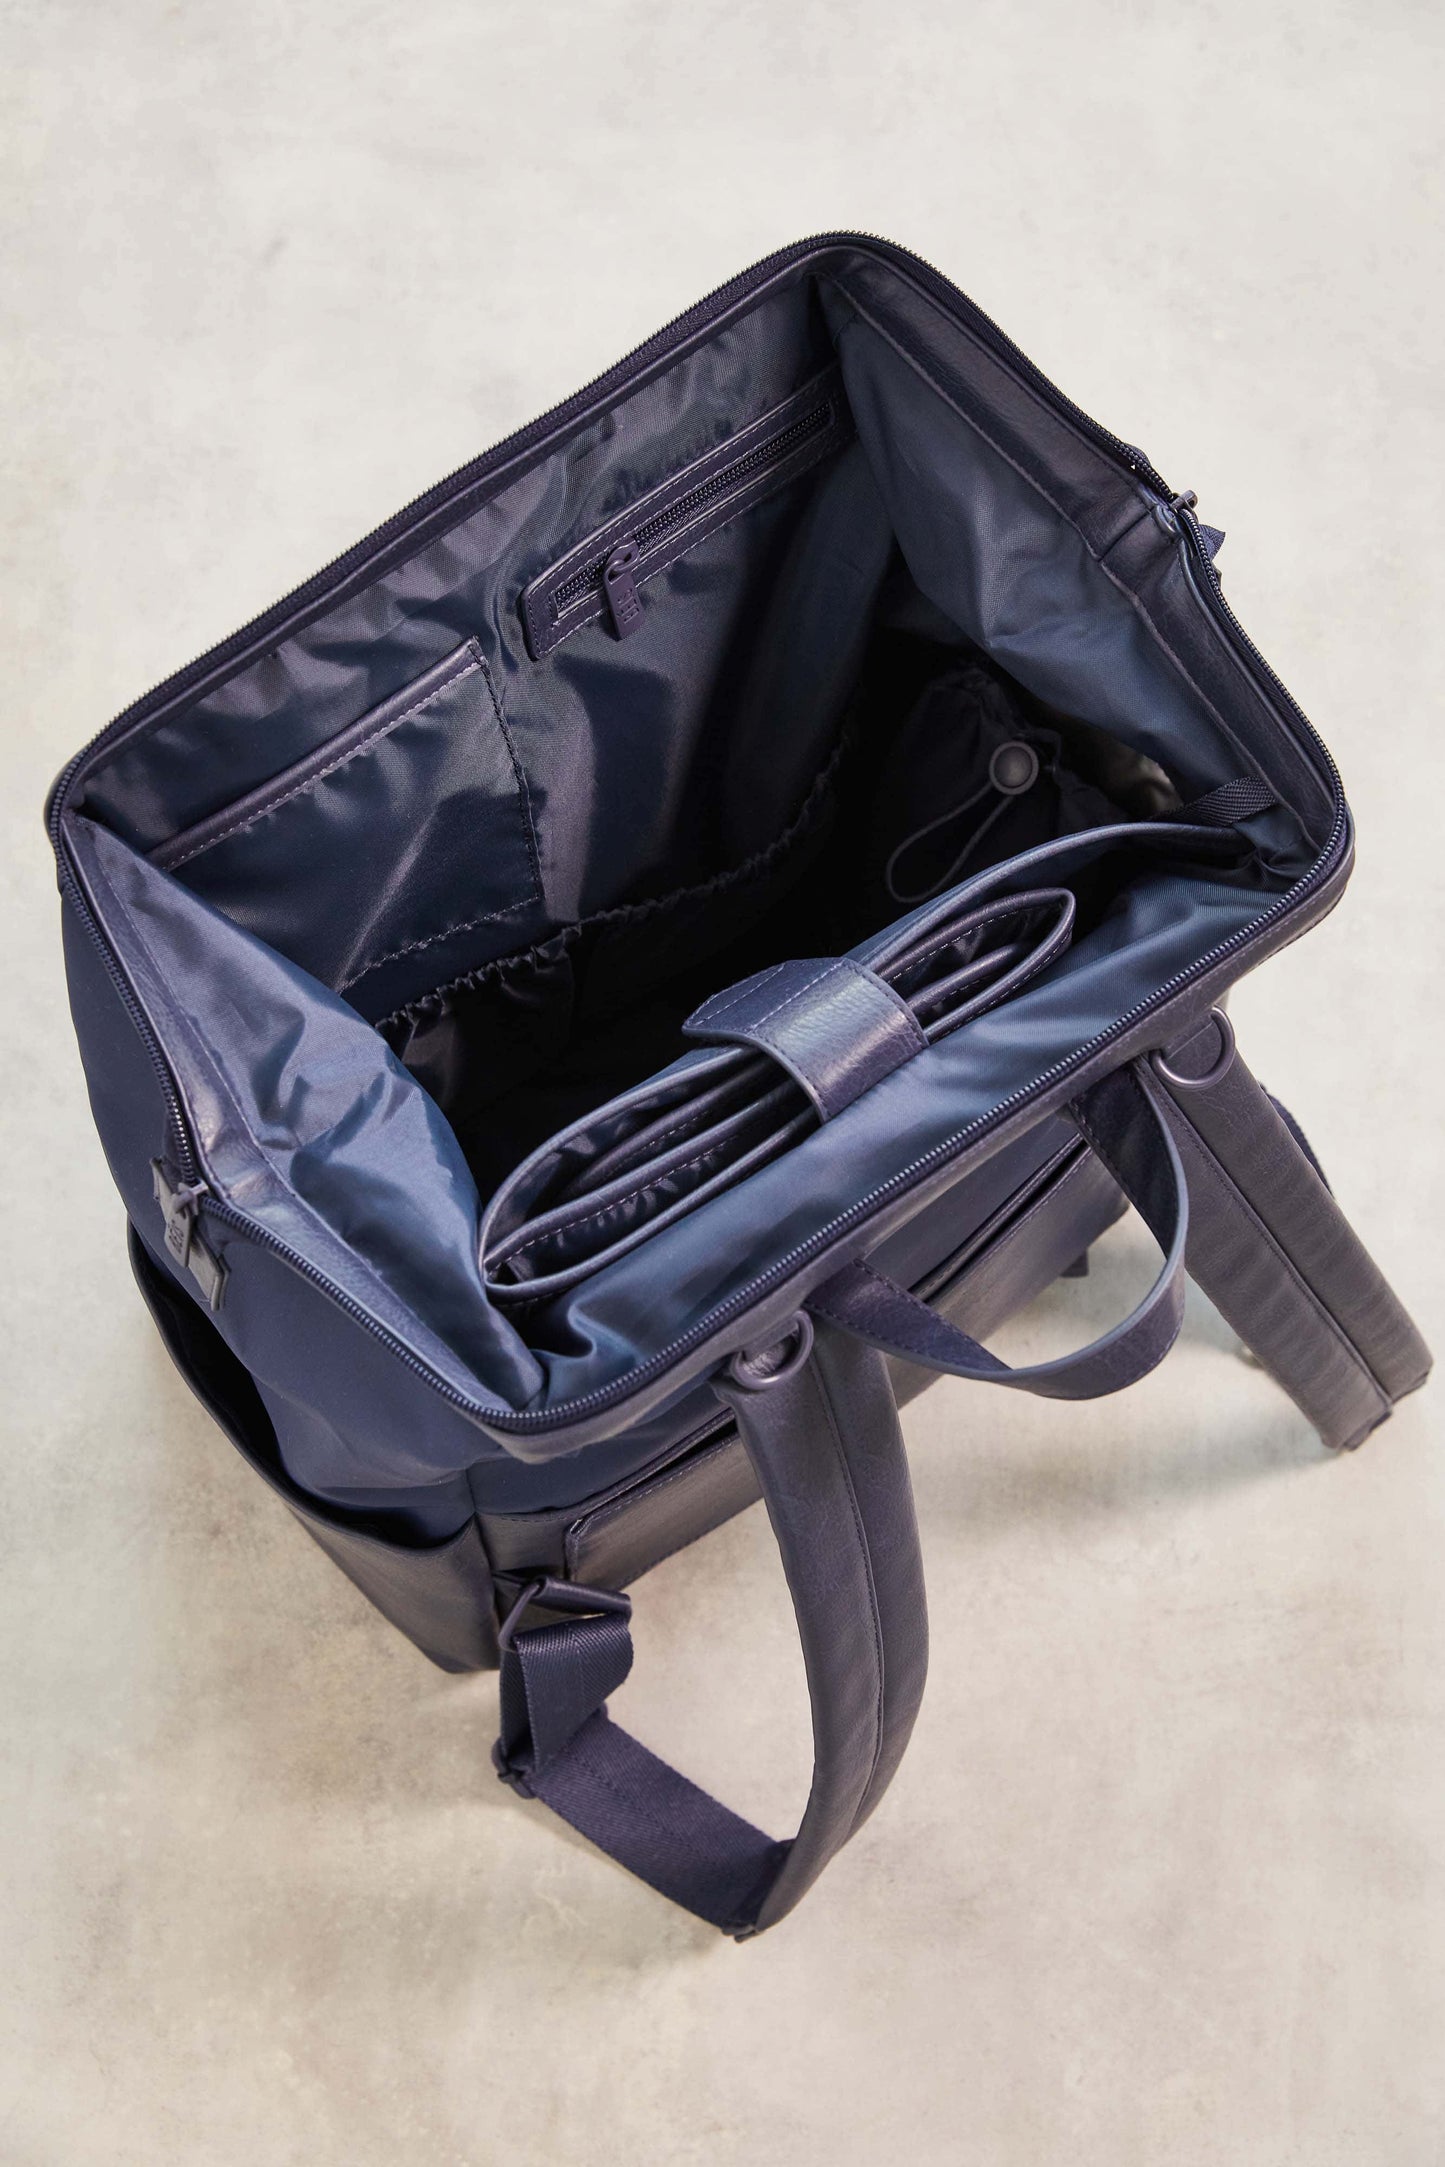 The Backpack Diaper Bag in Navy